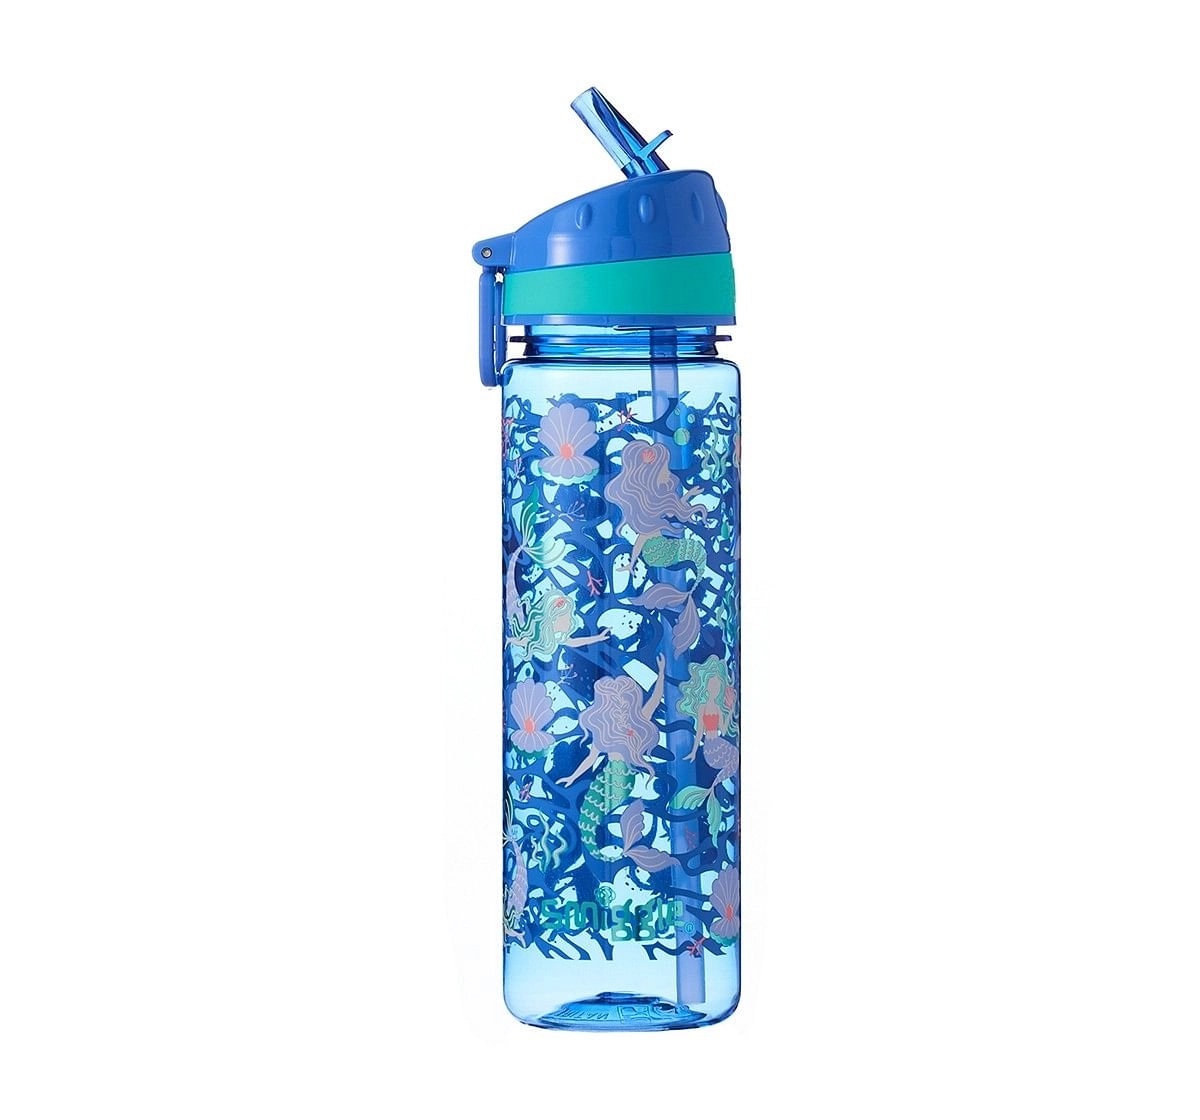  Smiggle Flow Drink Bottle with Flip Top Spout Mermaid Print Bags for Kids age 3Y+ (Cornflower Blue)